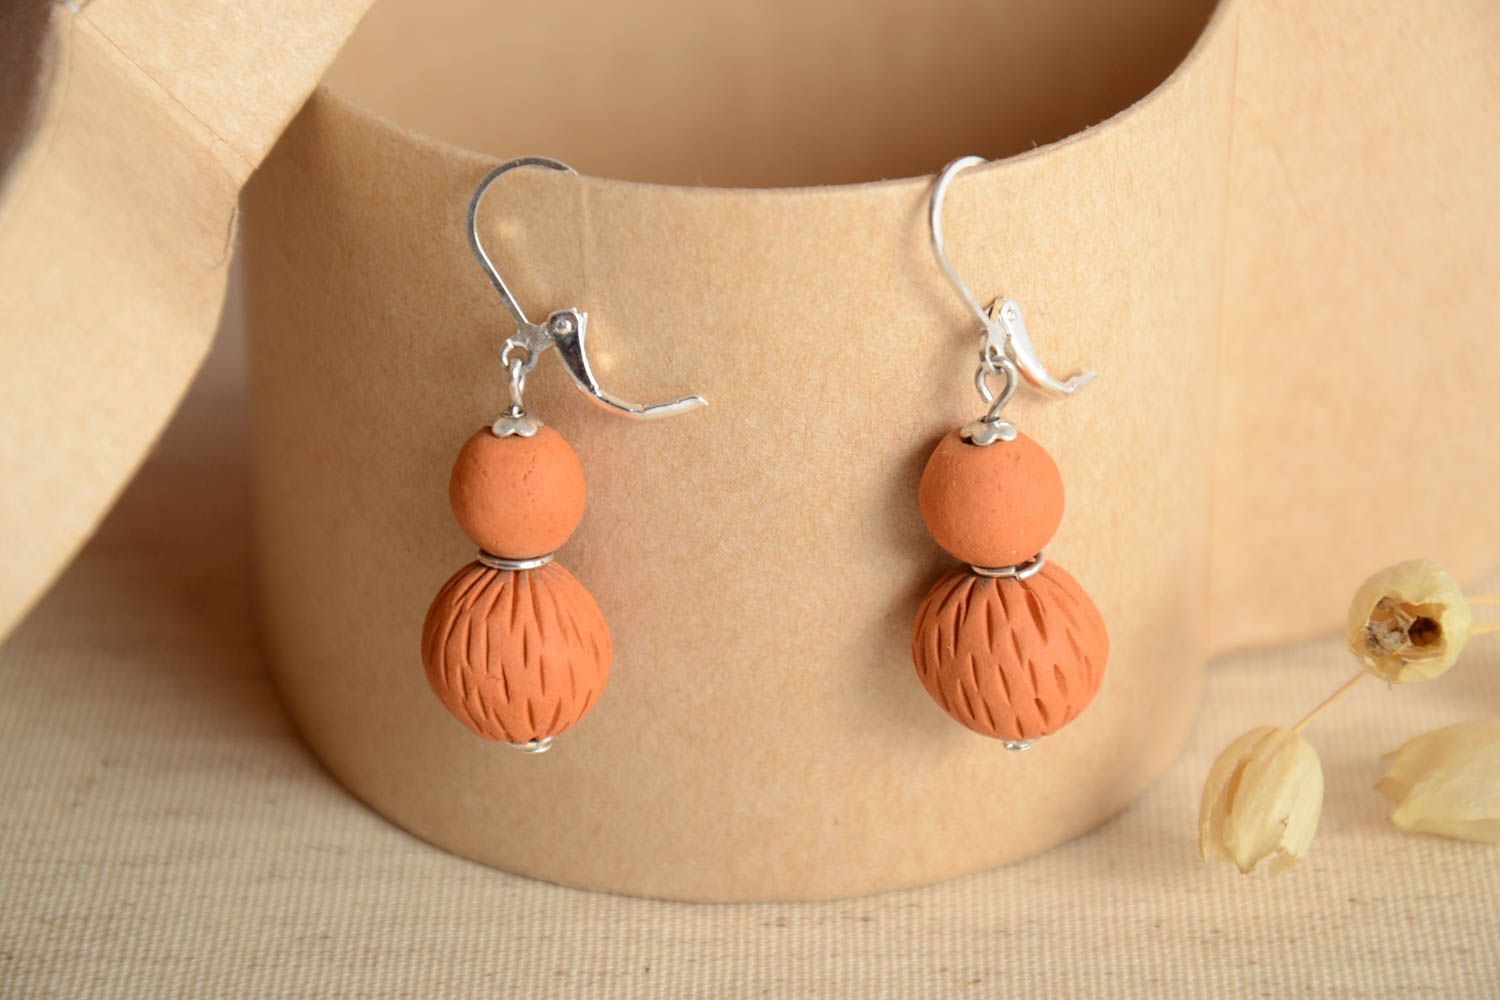 Handmade ceramic earrings clay earrings ball earrings fashion accessories photo 1